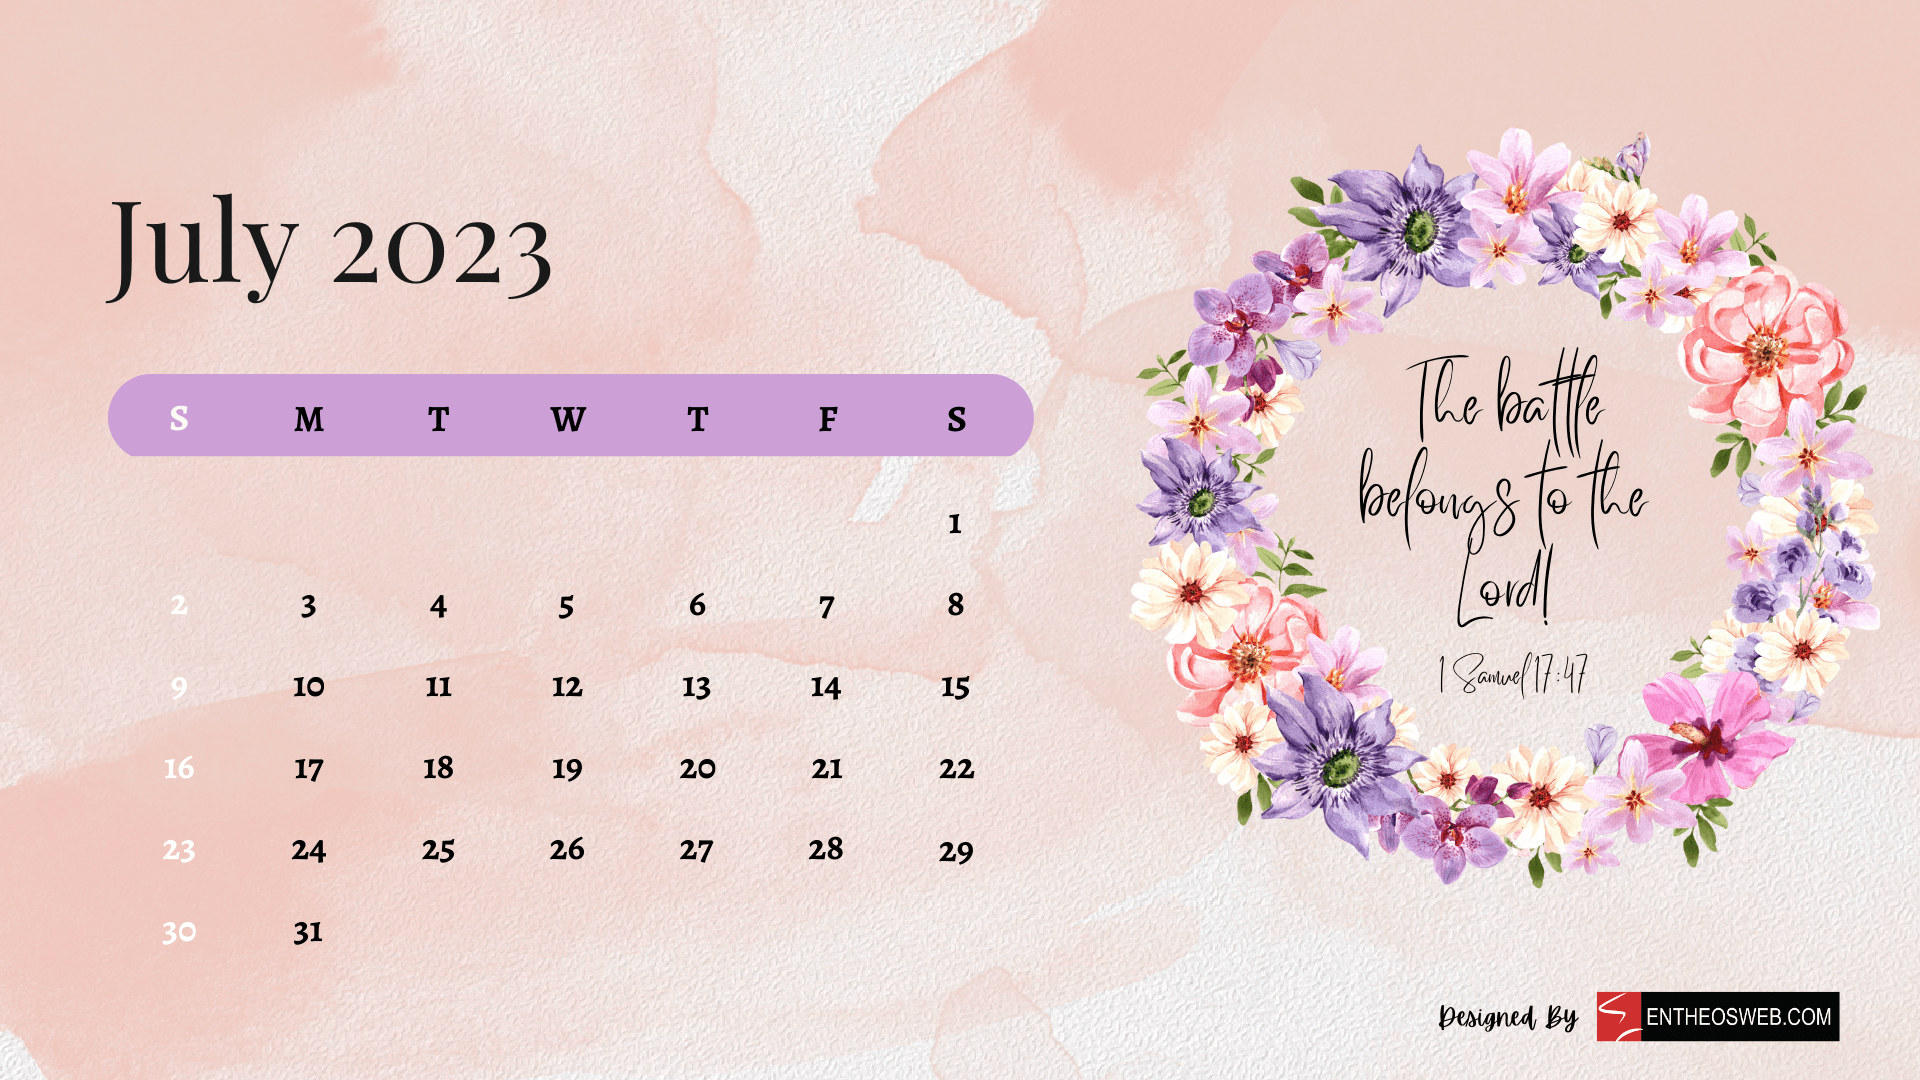 FREE 25 July 2023 Desktop Calendar Wallpapers